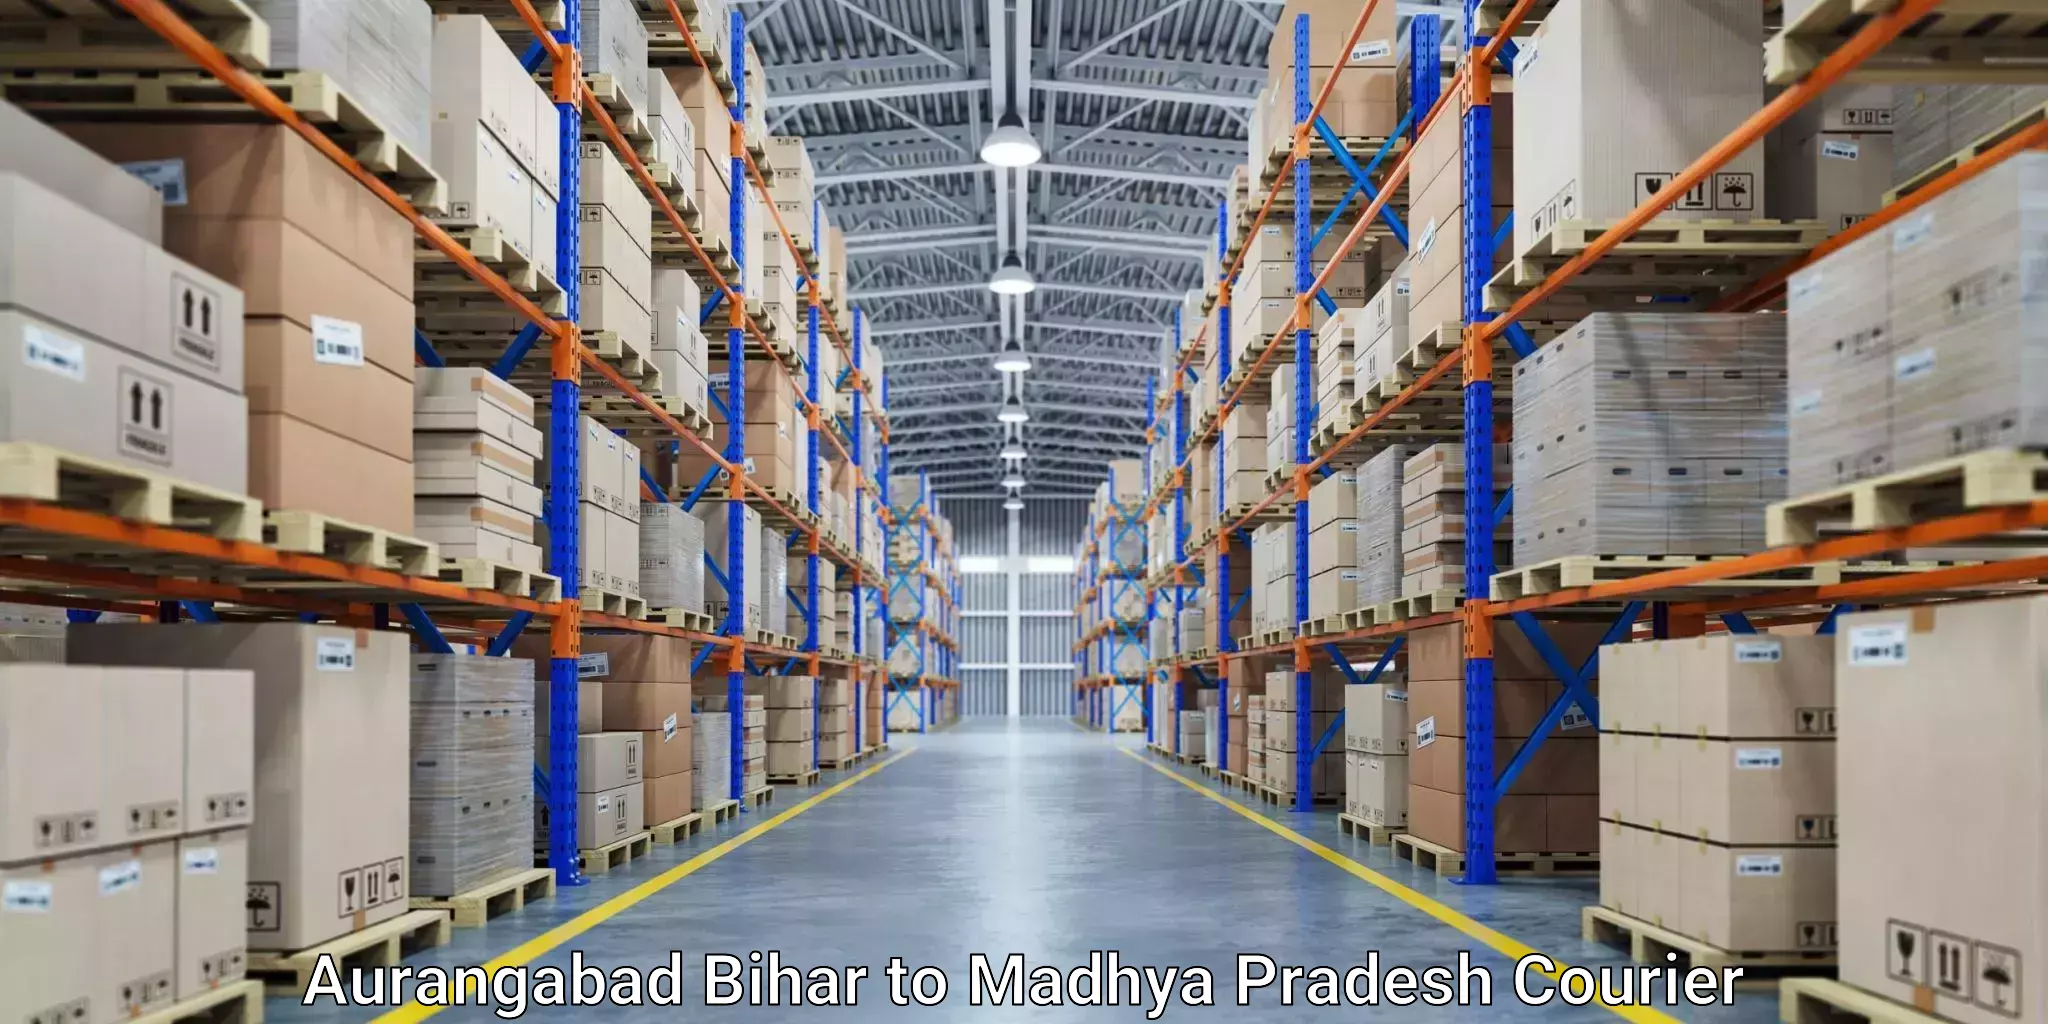 Large package courier Aurangabad Bihar to Jabalpur